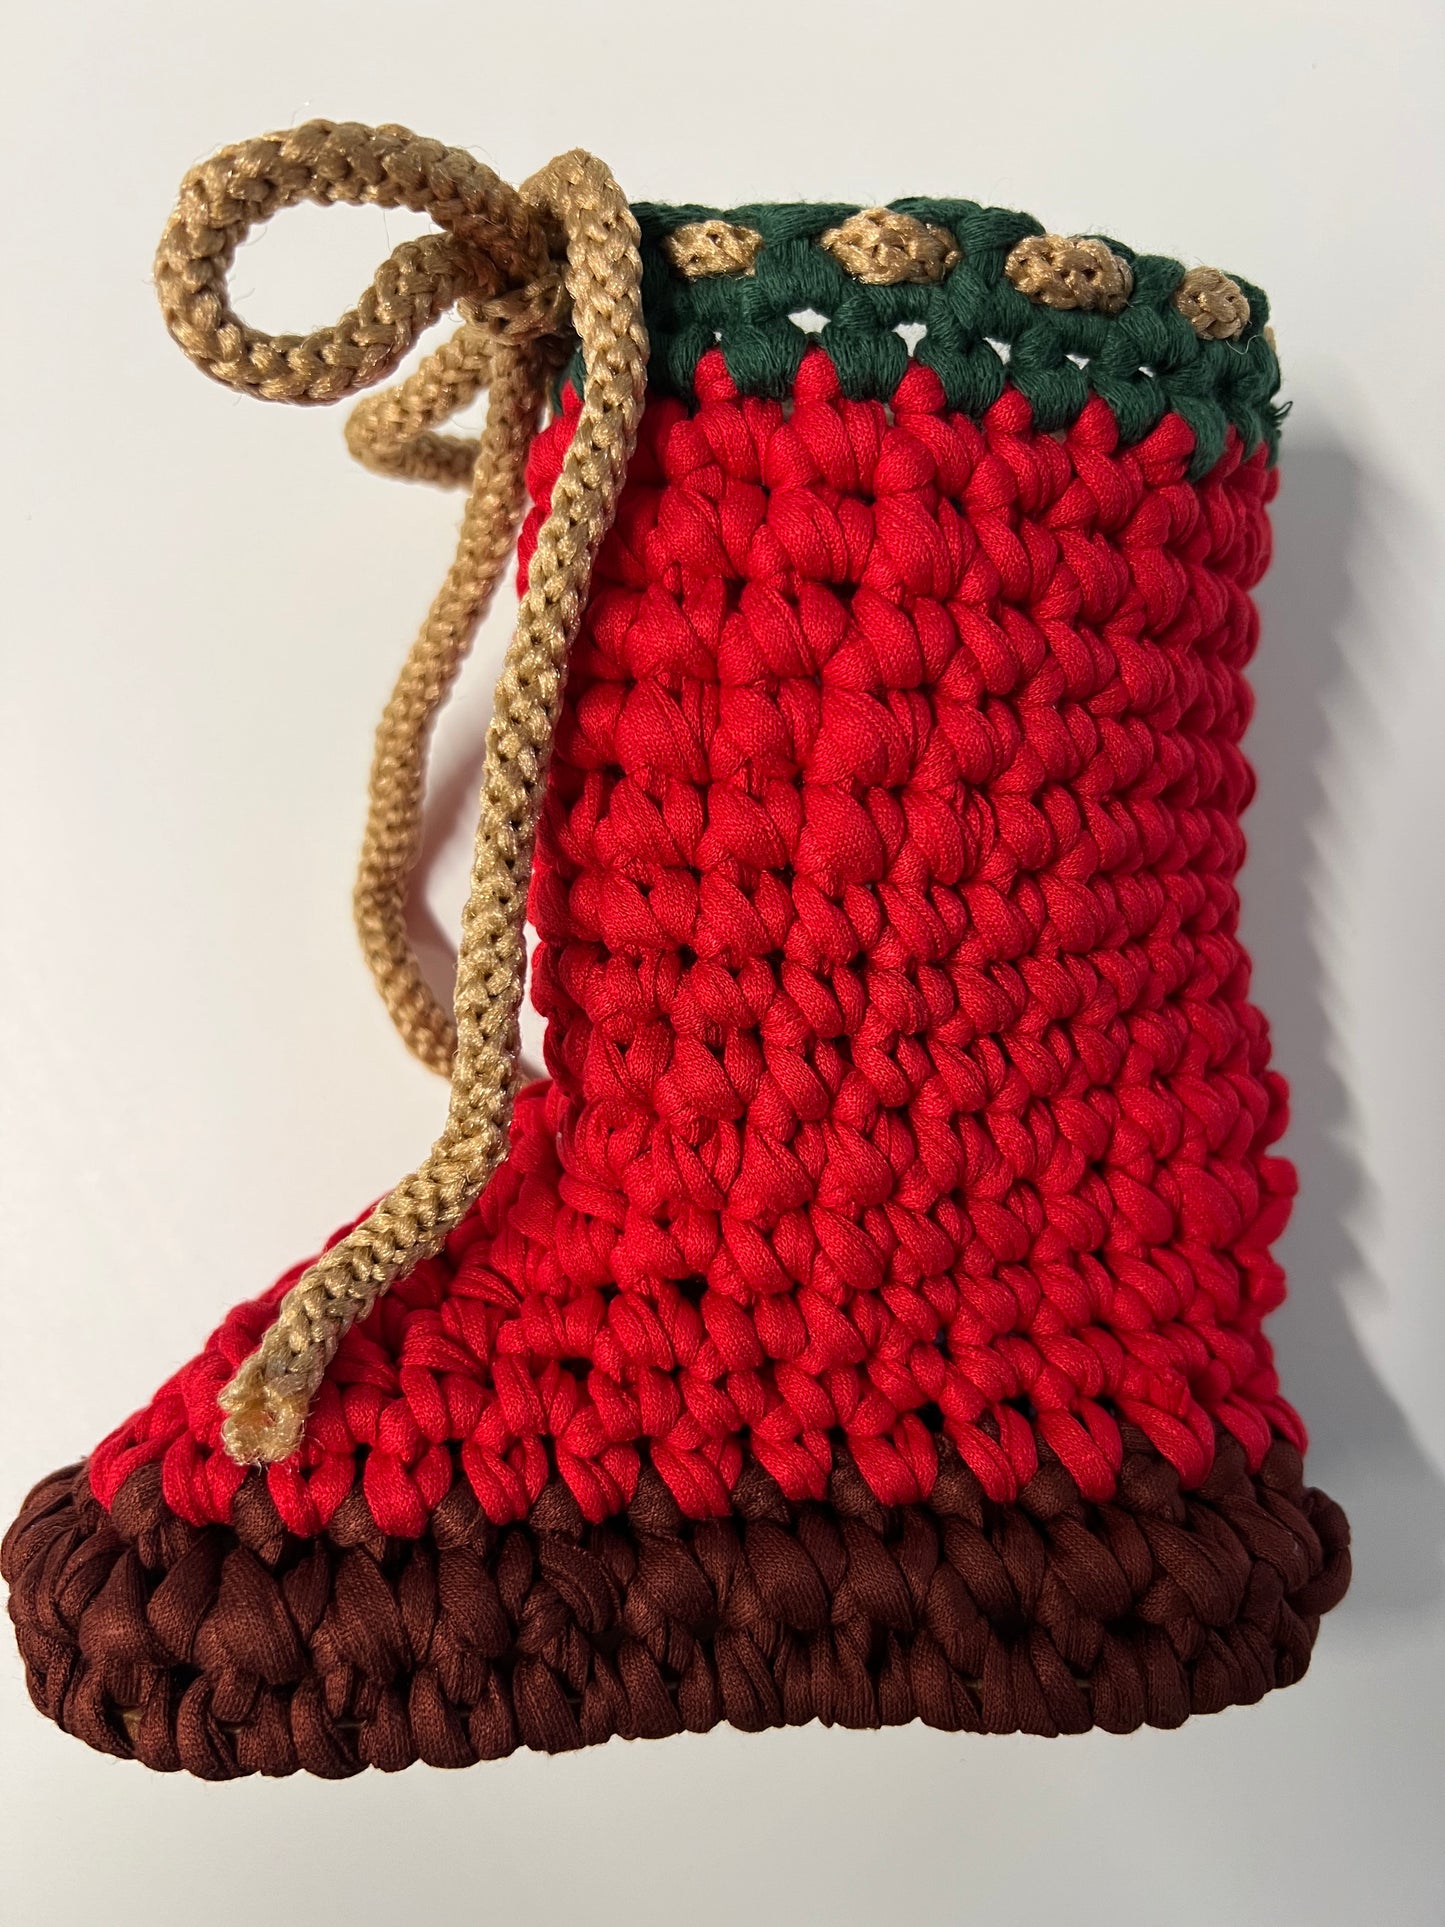 Guest artist: Santa’s Boot, Vintage Crocheted Christmas Boot, St. Nicholas decoration, handmade Christmas crochet boot